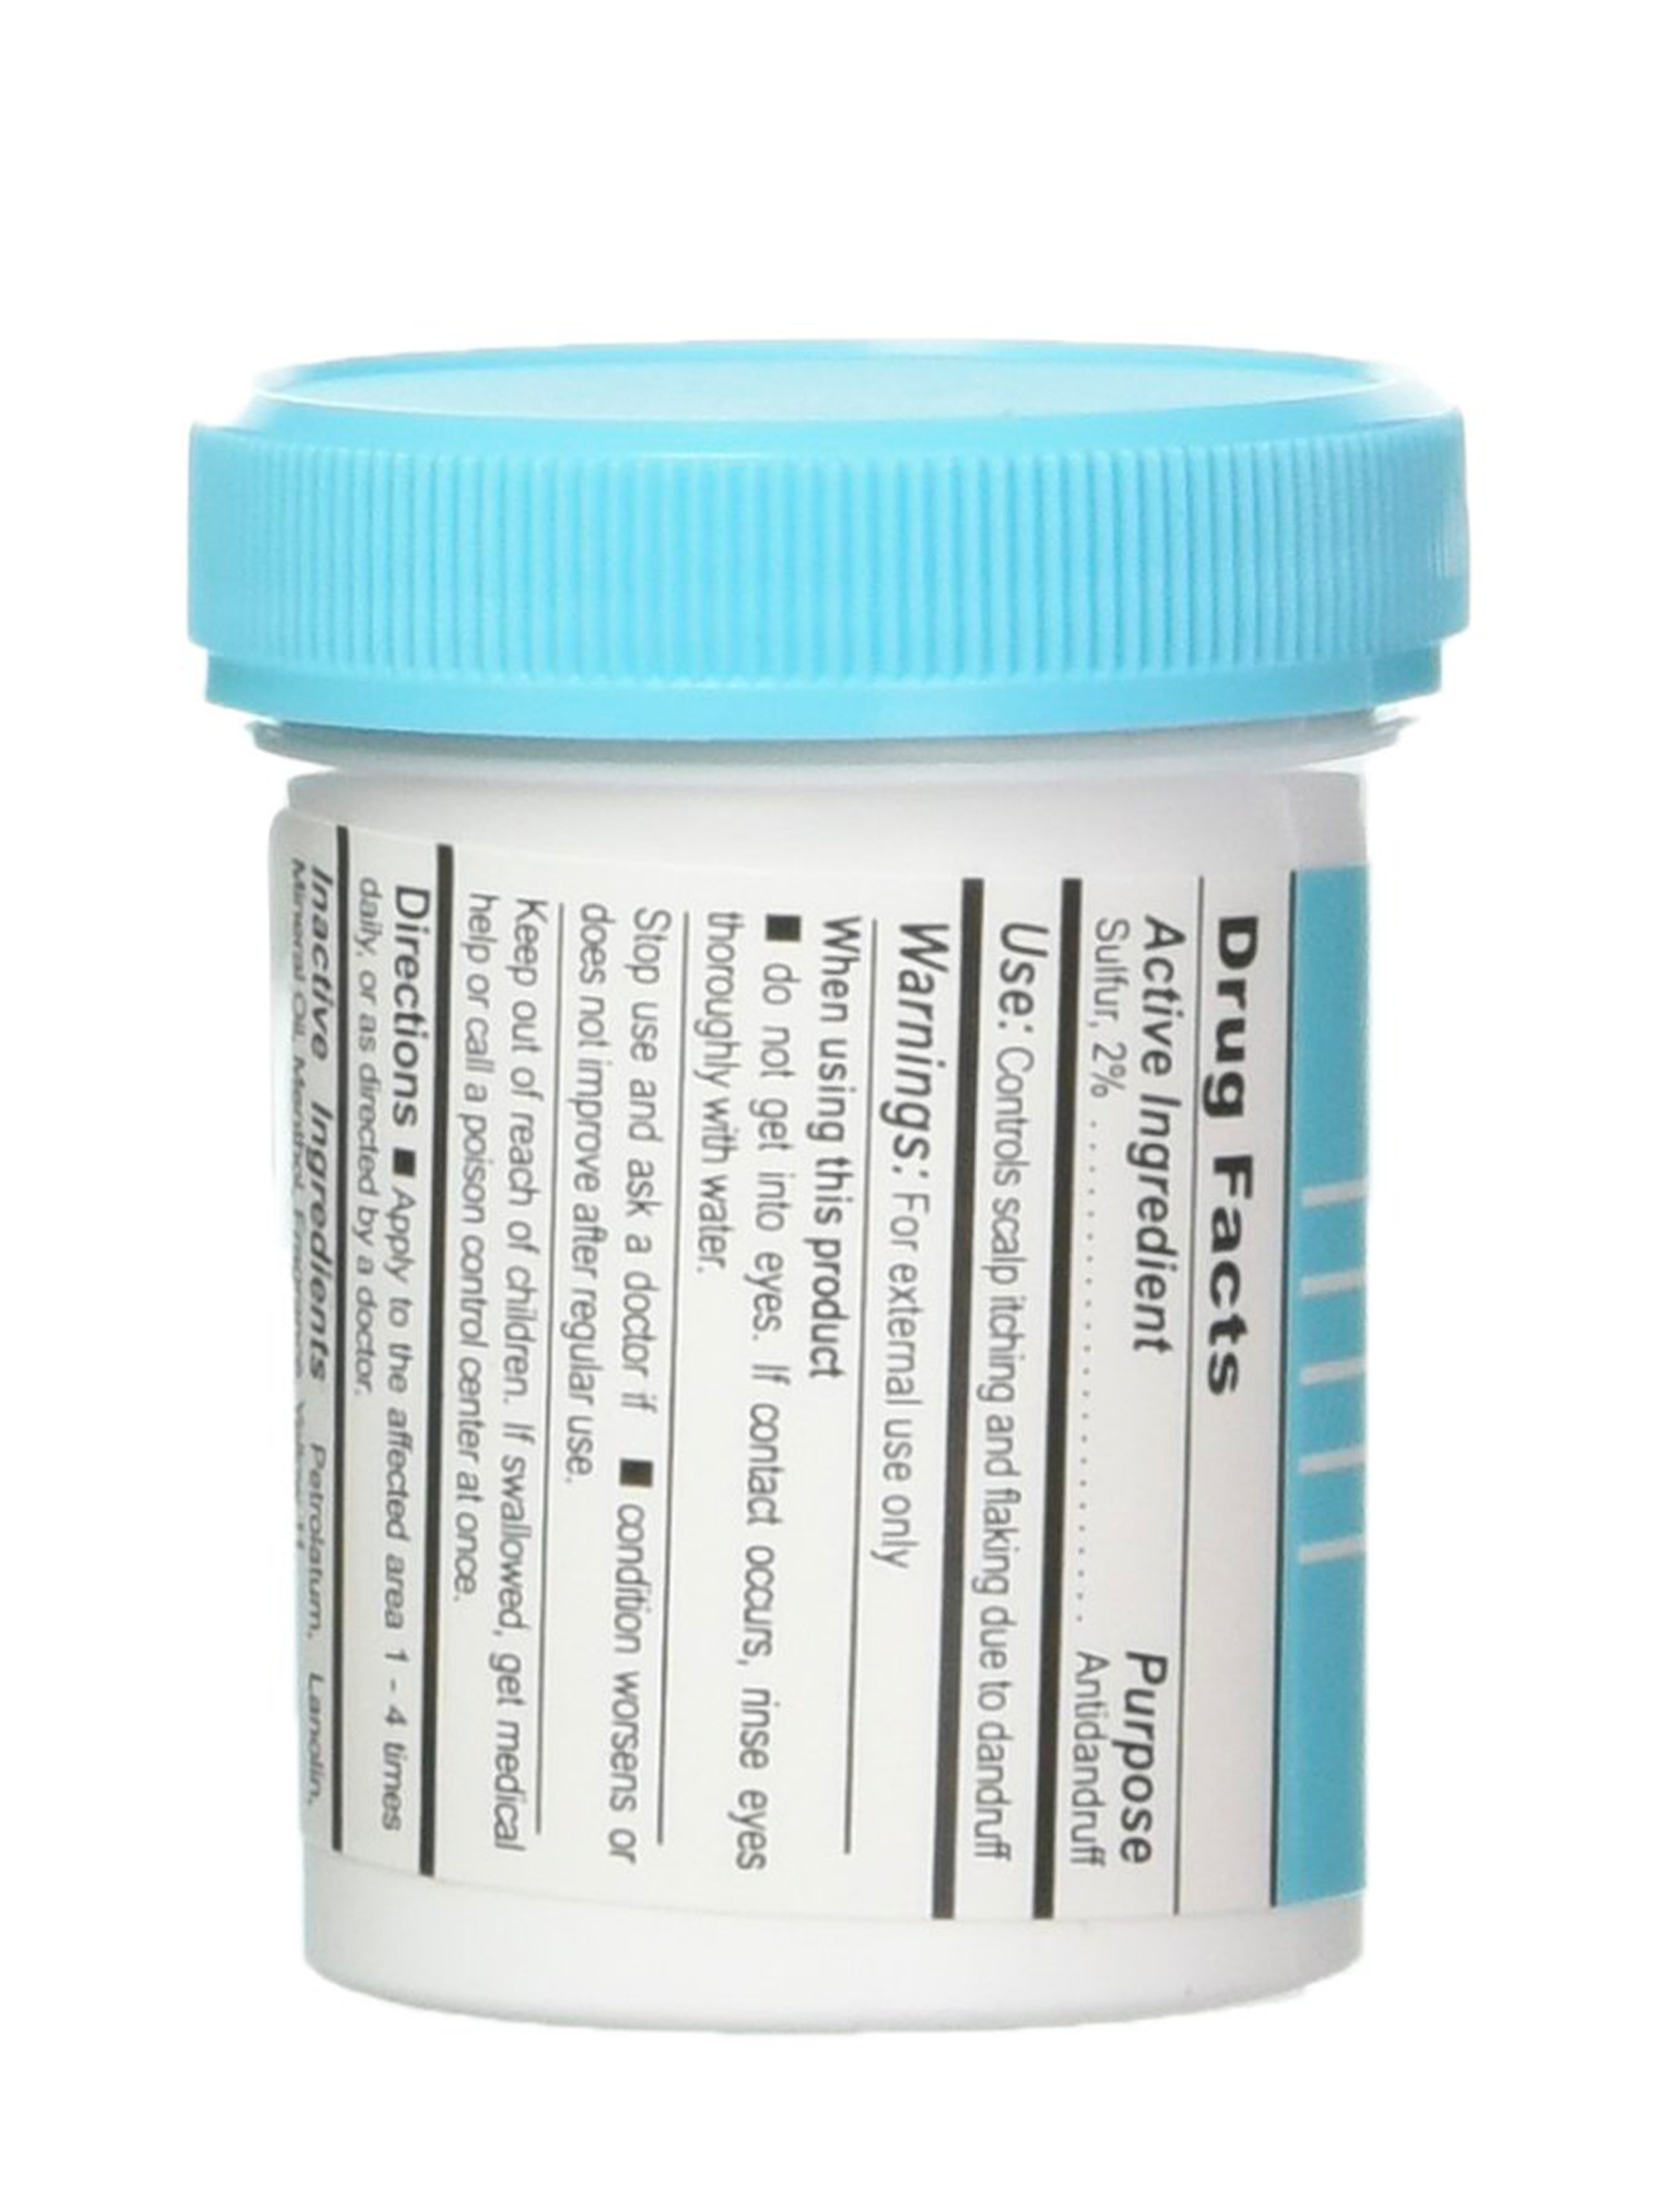 Sulfur 8 Medicated Light Formula Anti-Dandruff Hair & Scalp Conditioner 7.25oz